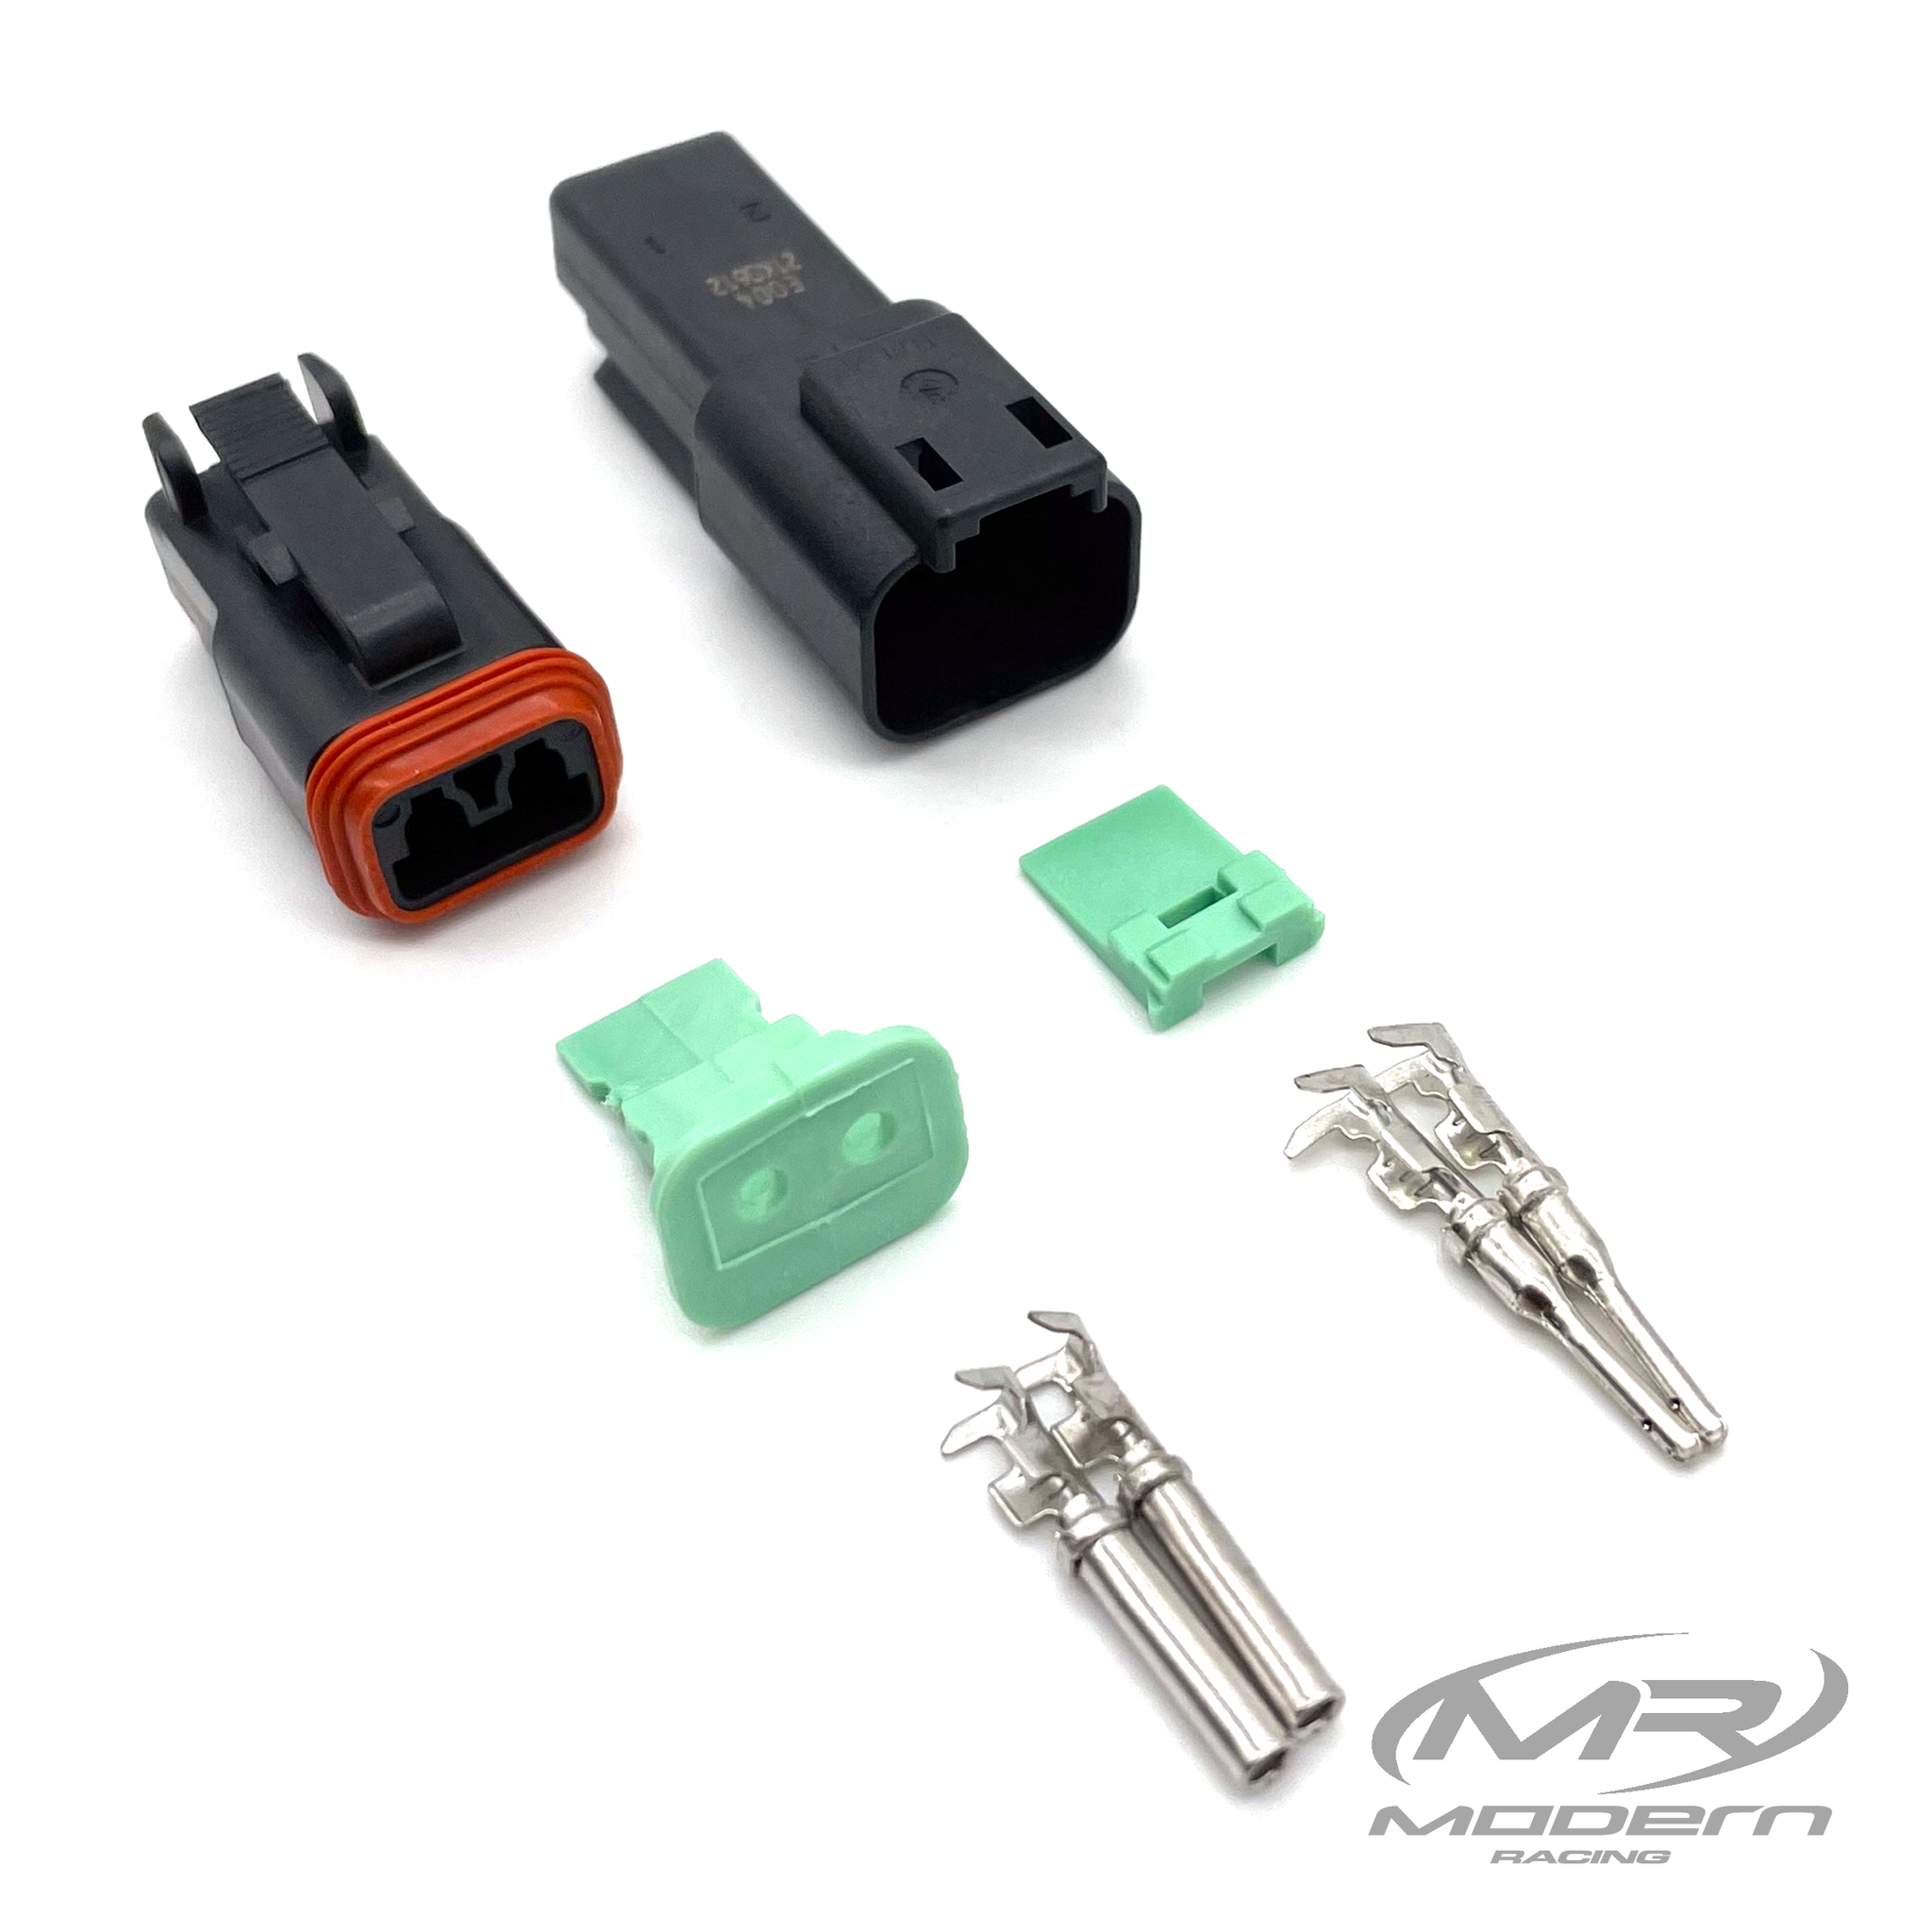 Deutsch DT 2 Socket/Pin Mating Pair Connector Kit (Black)